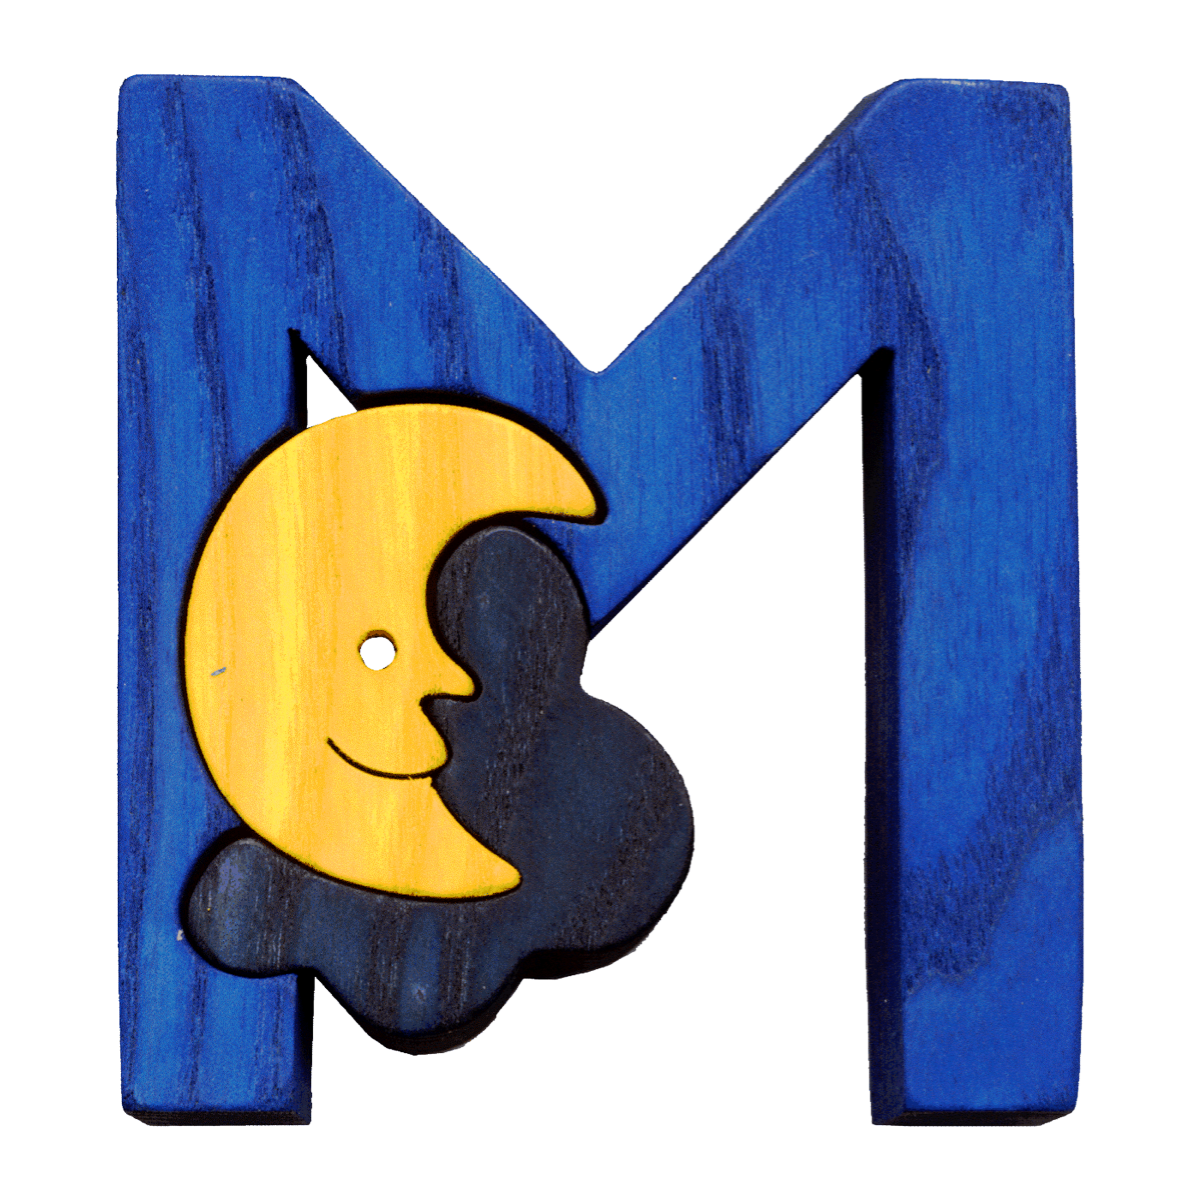 M - moon